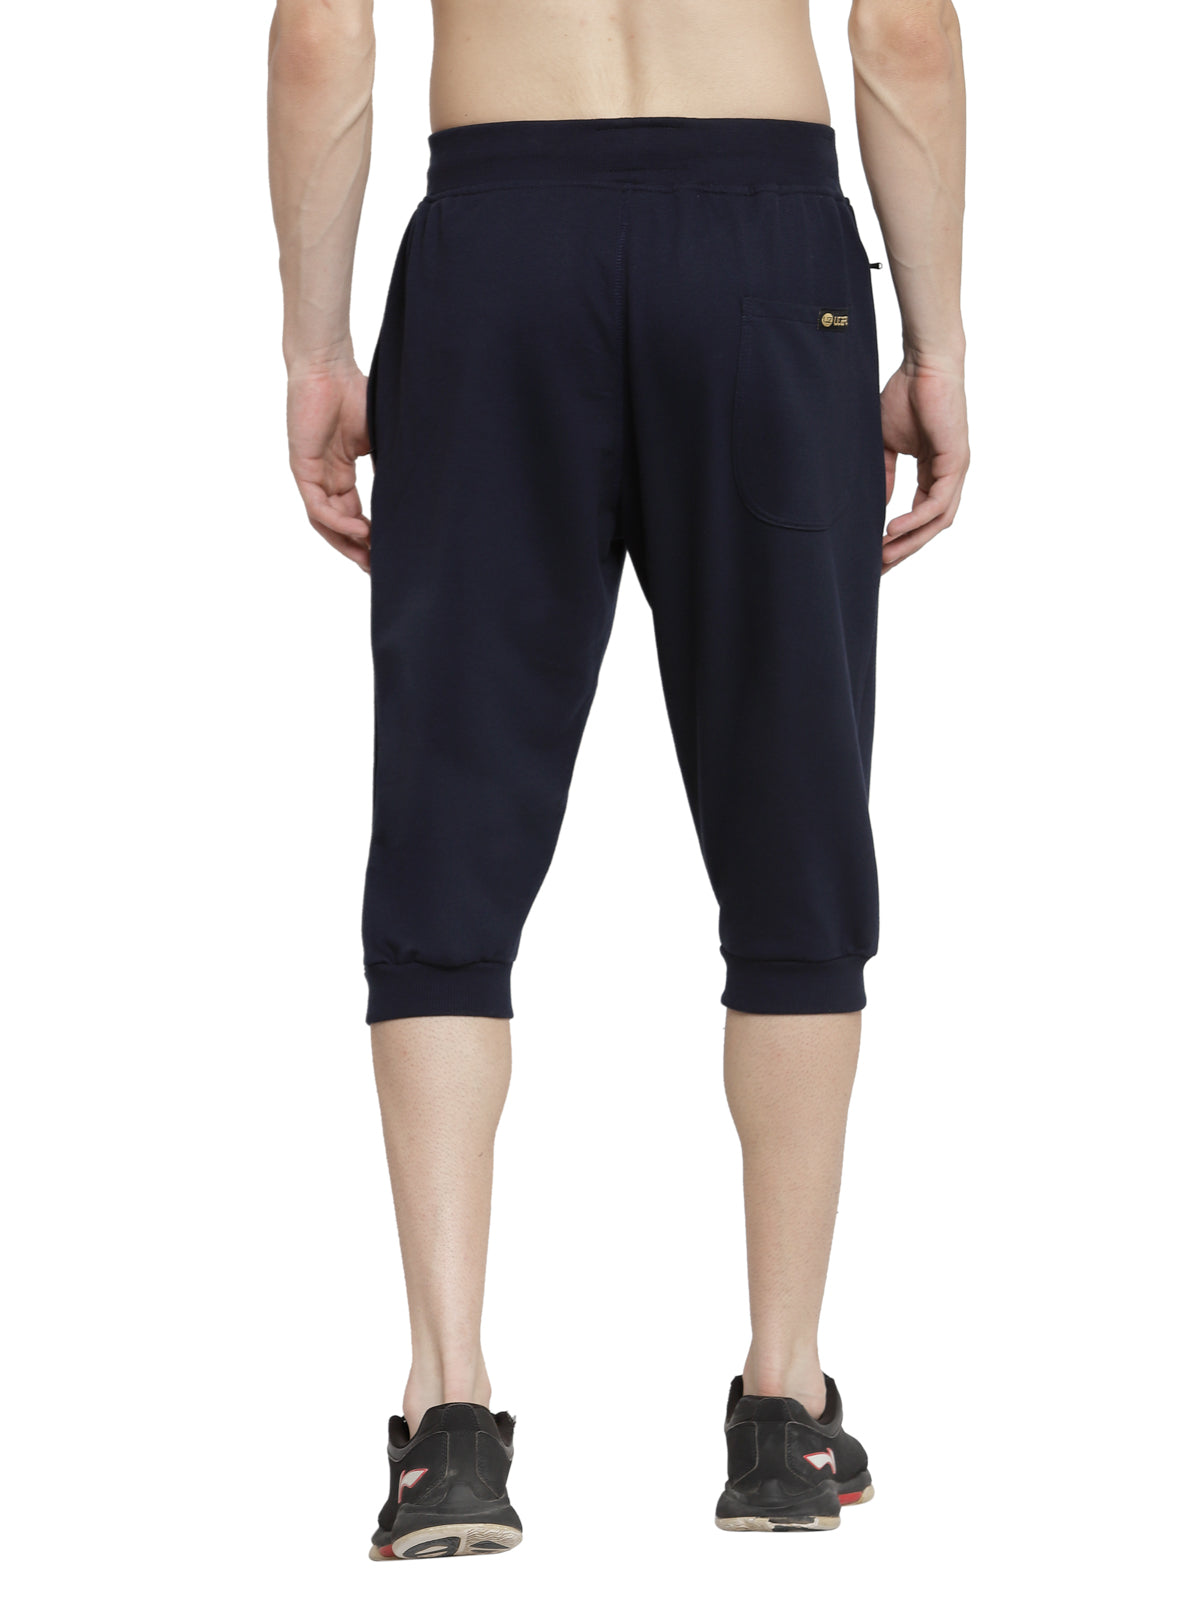 Men's Cotton Three Fourth Capri Shorts With Two Zippered Pockets